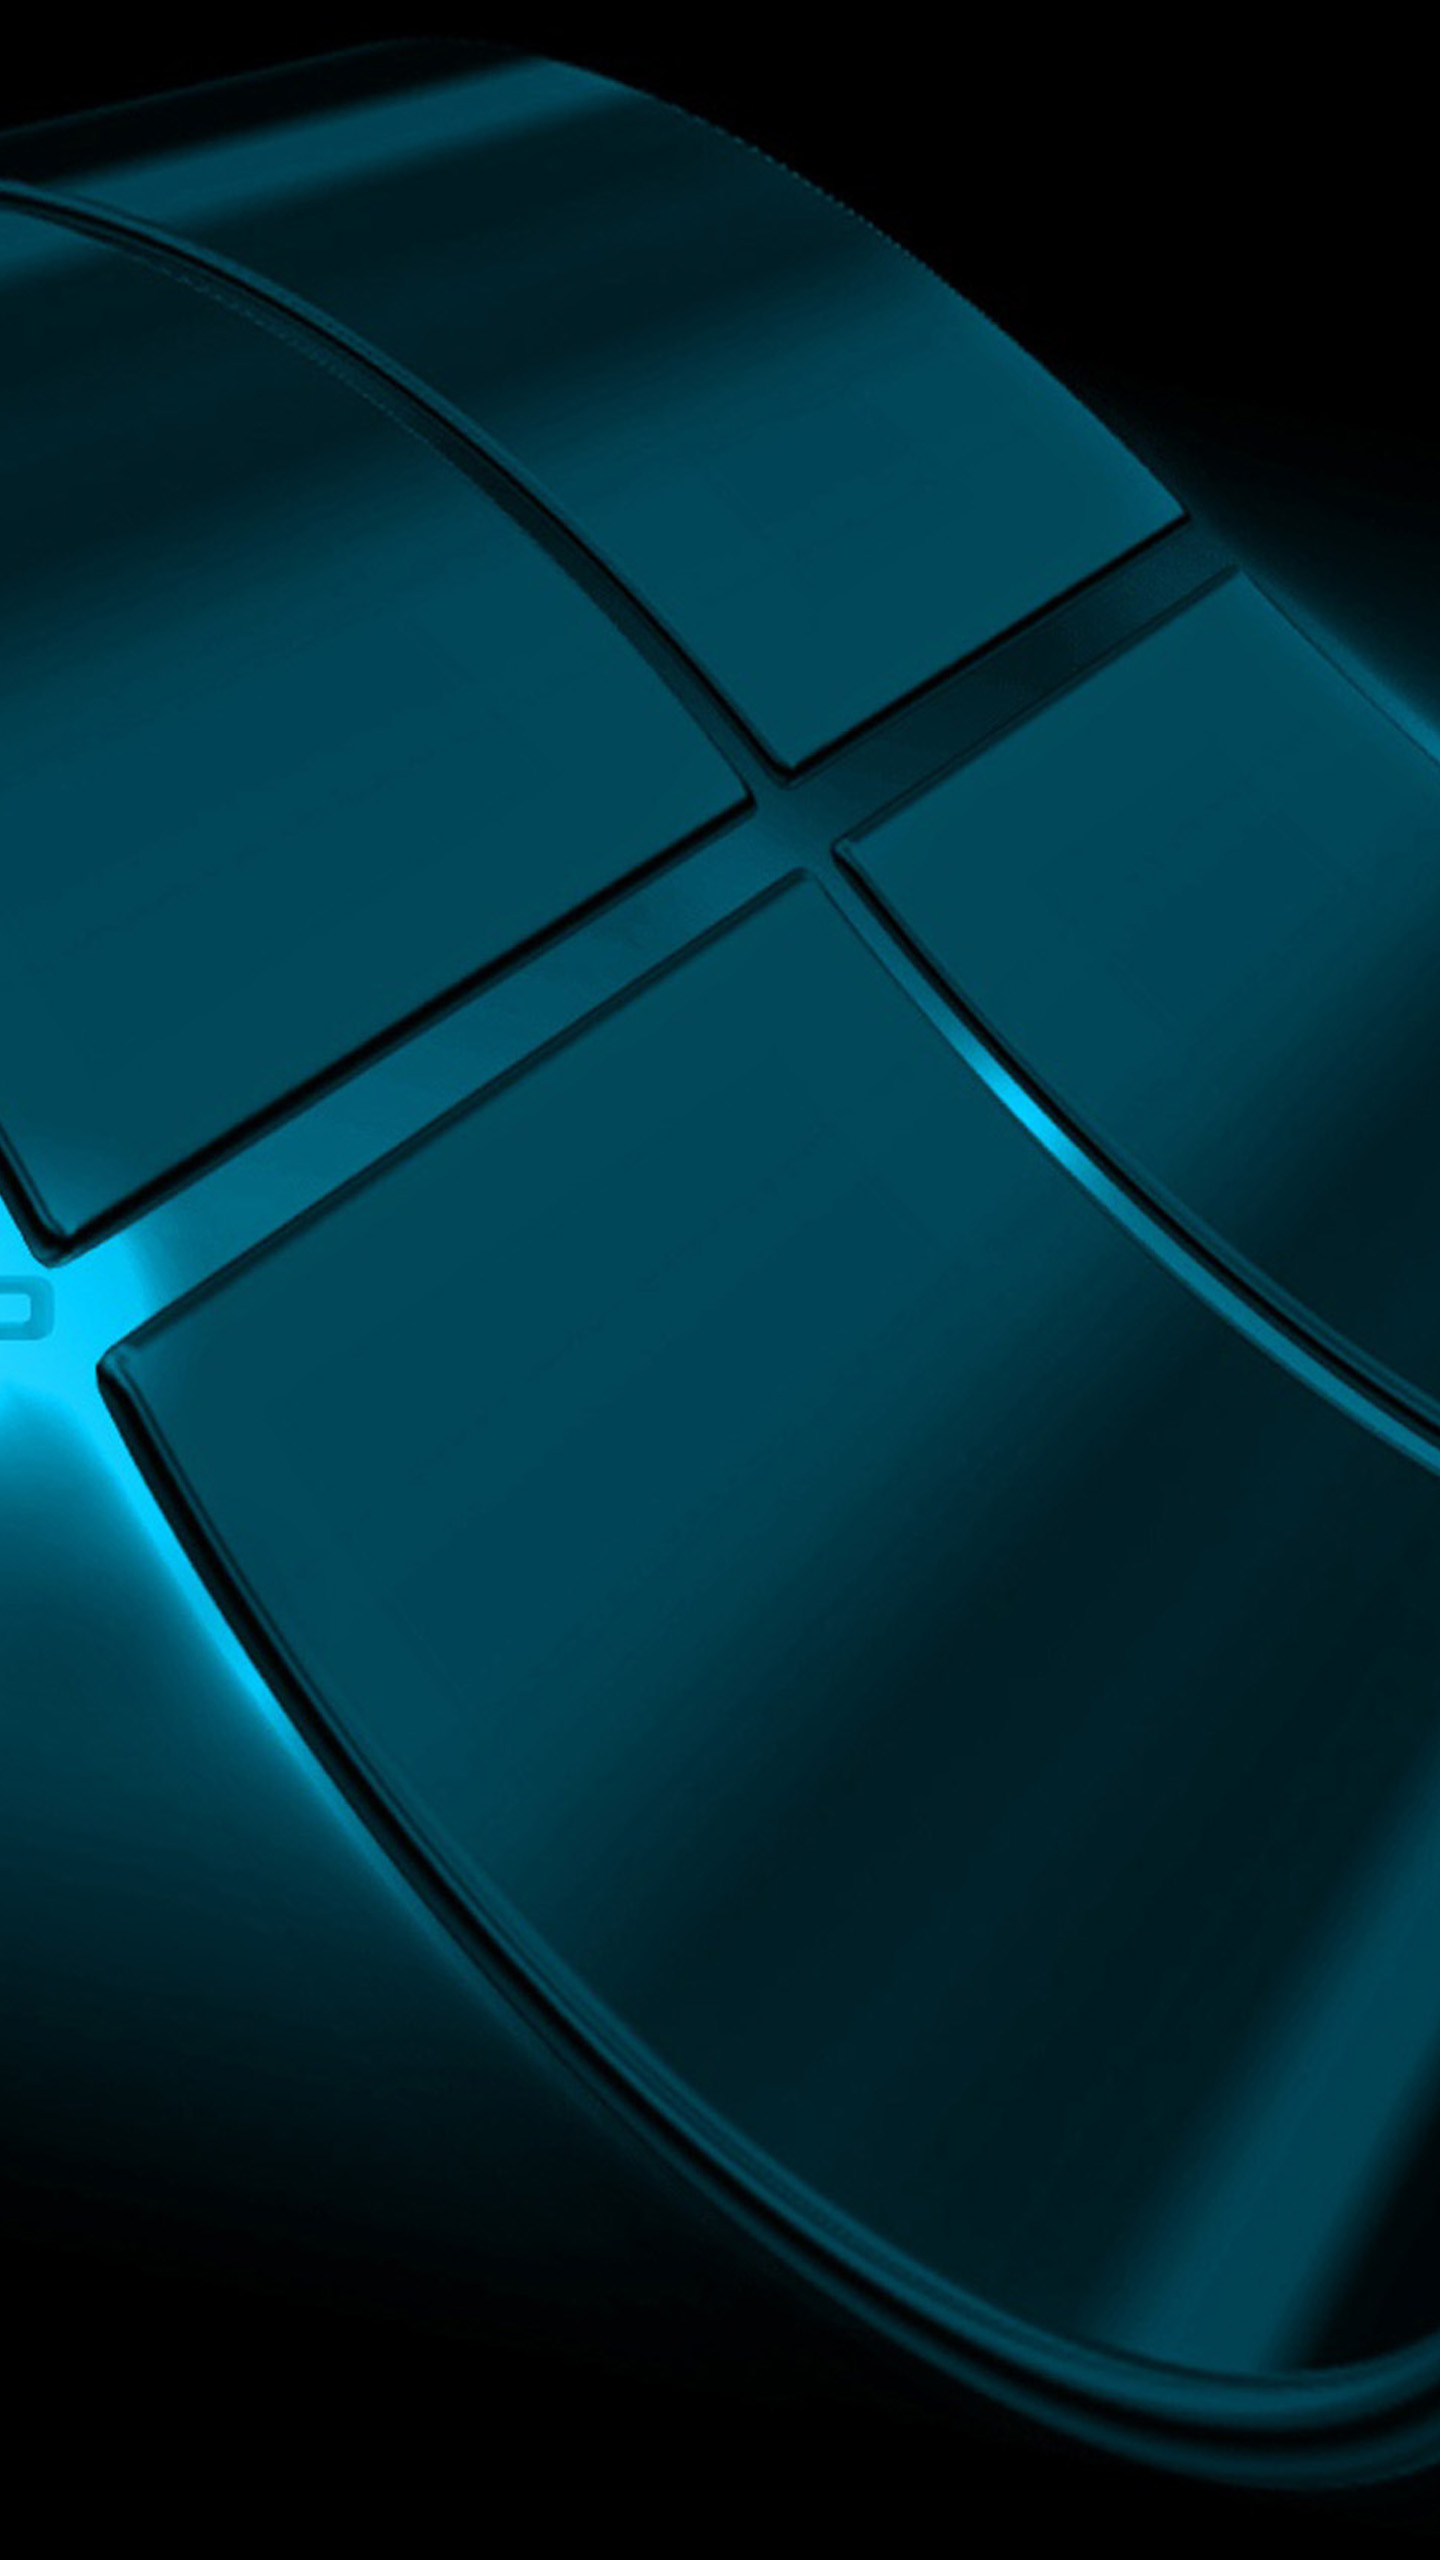 windows xp blue illusion Galaxy S6 Wallpaper Galaxy S6 Wallpapers